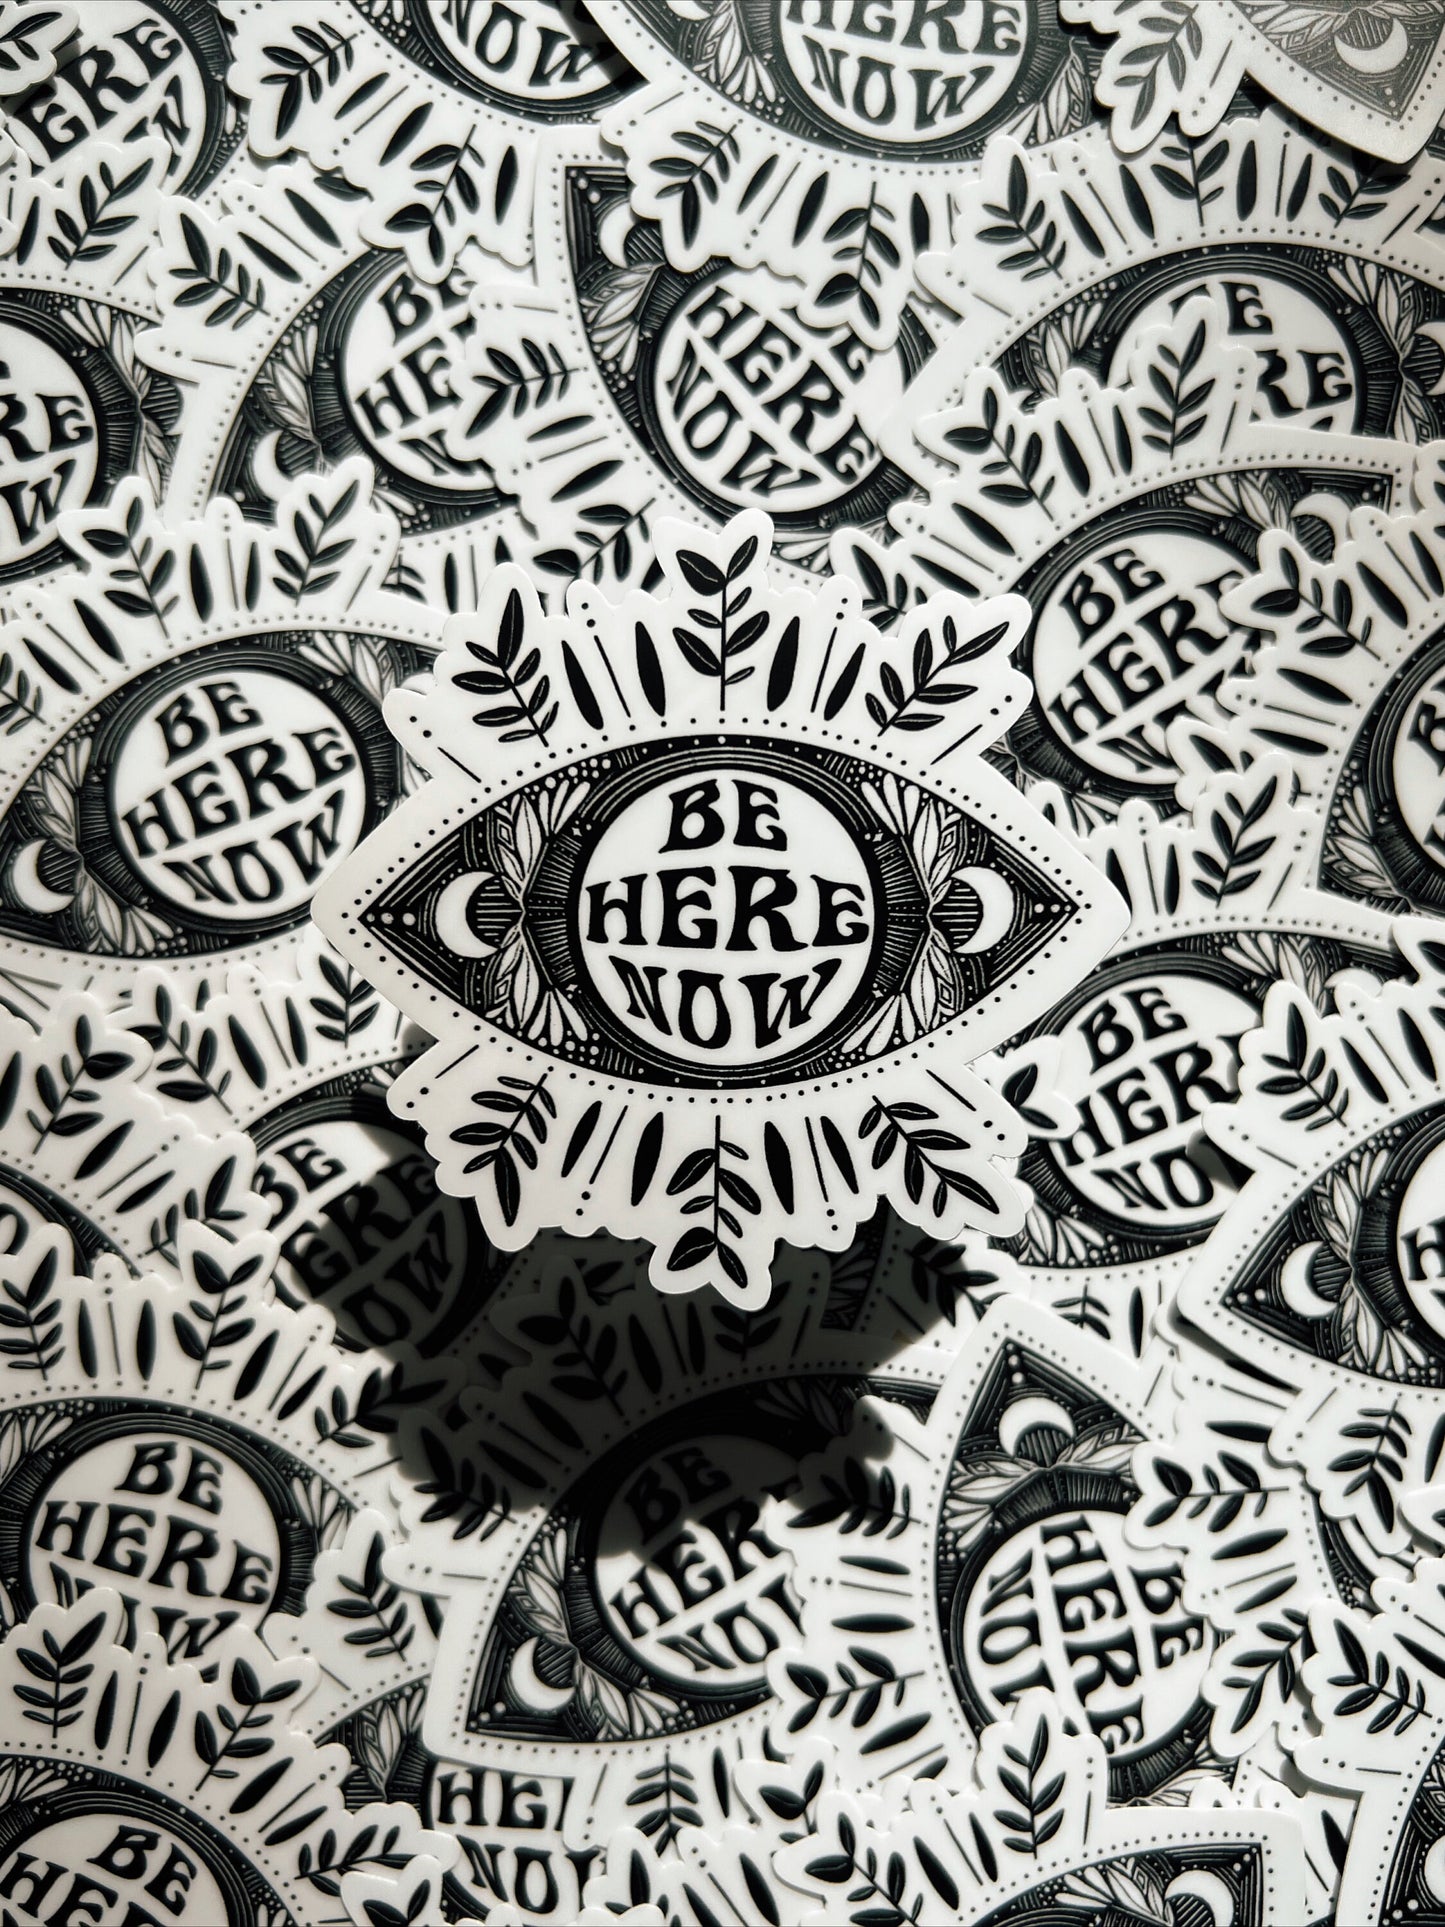 Be Here Now - Black Vinyl Sticker